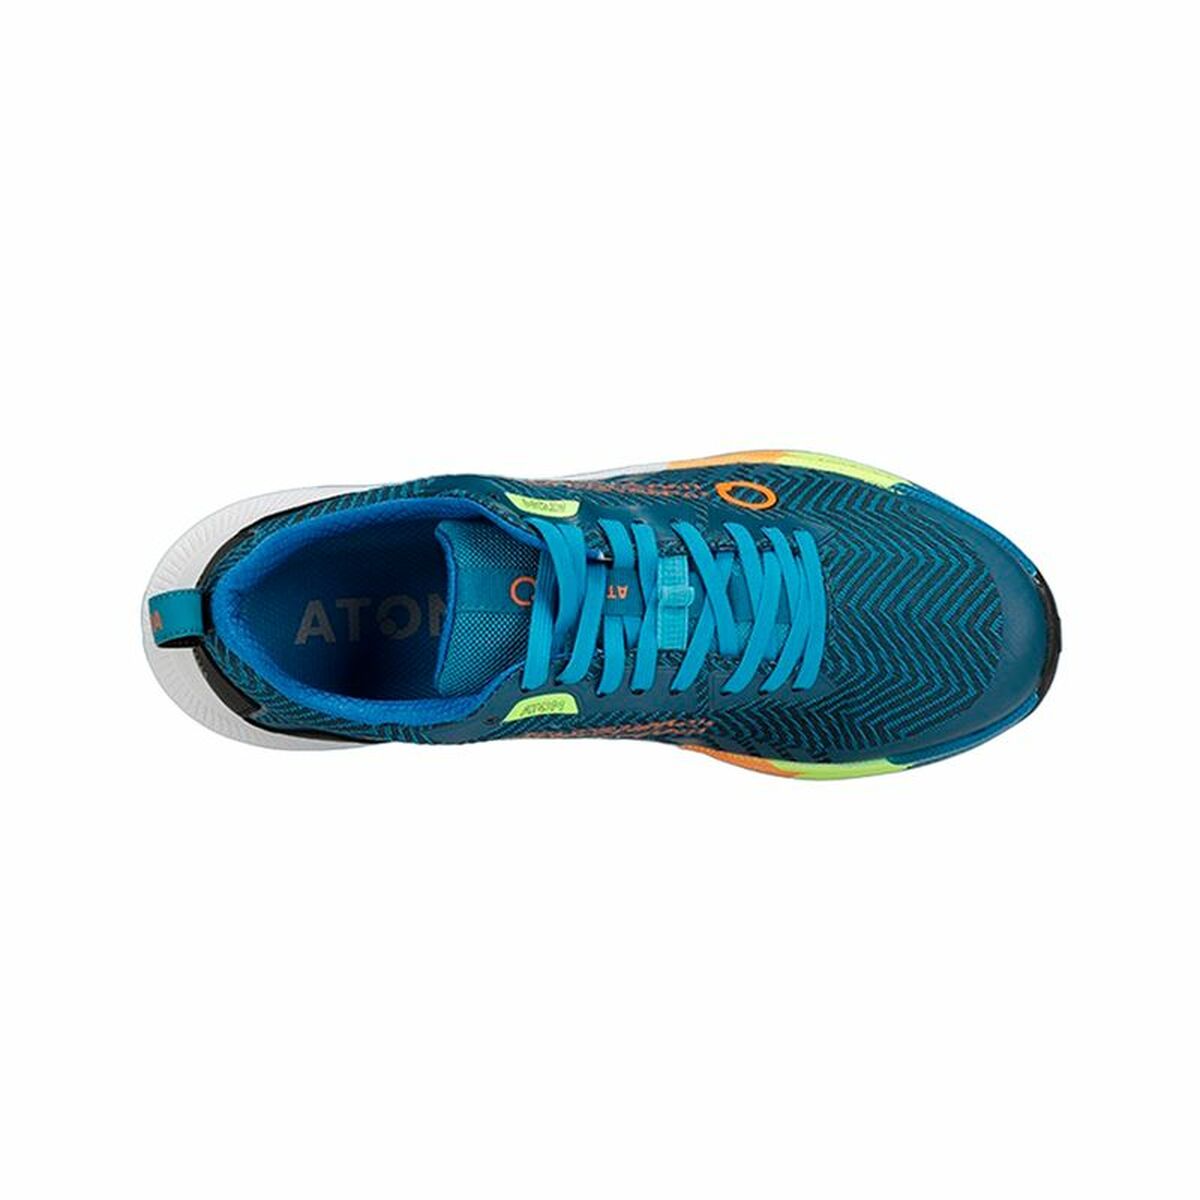 Chaussures de Sport pour Homme Atom AT121 Terra Technology Bleu